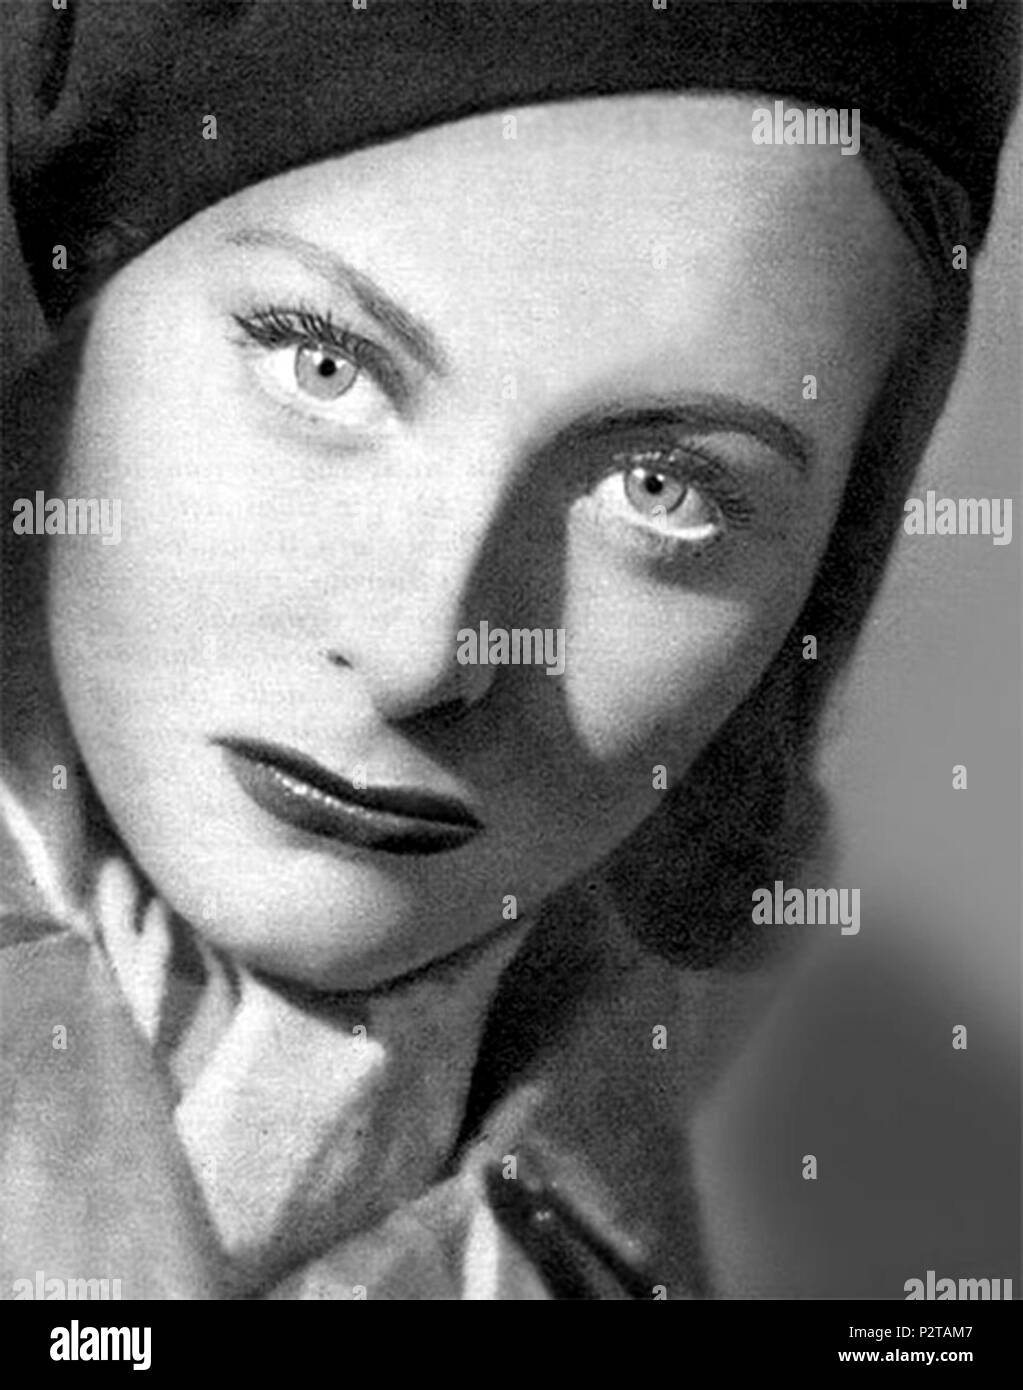 . Italiano : L'attrice francese nel 1951 Michèle Morgan . 16 février 2014, 13:56:39. Inconnu 58 Morgan Michele Banque D'Images